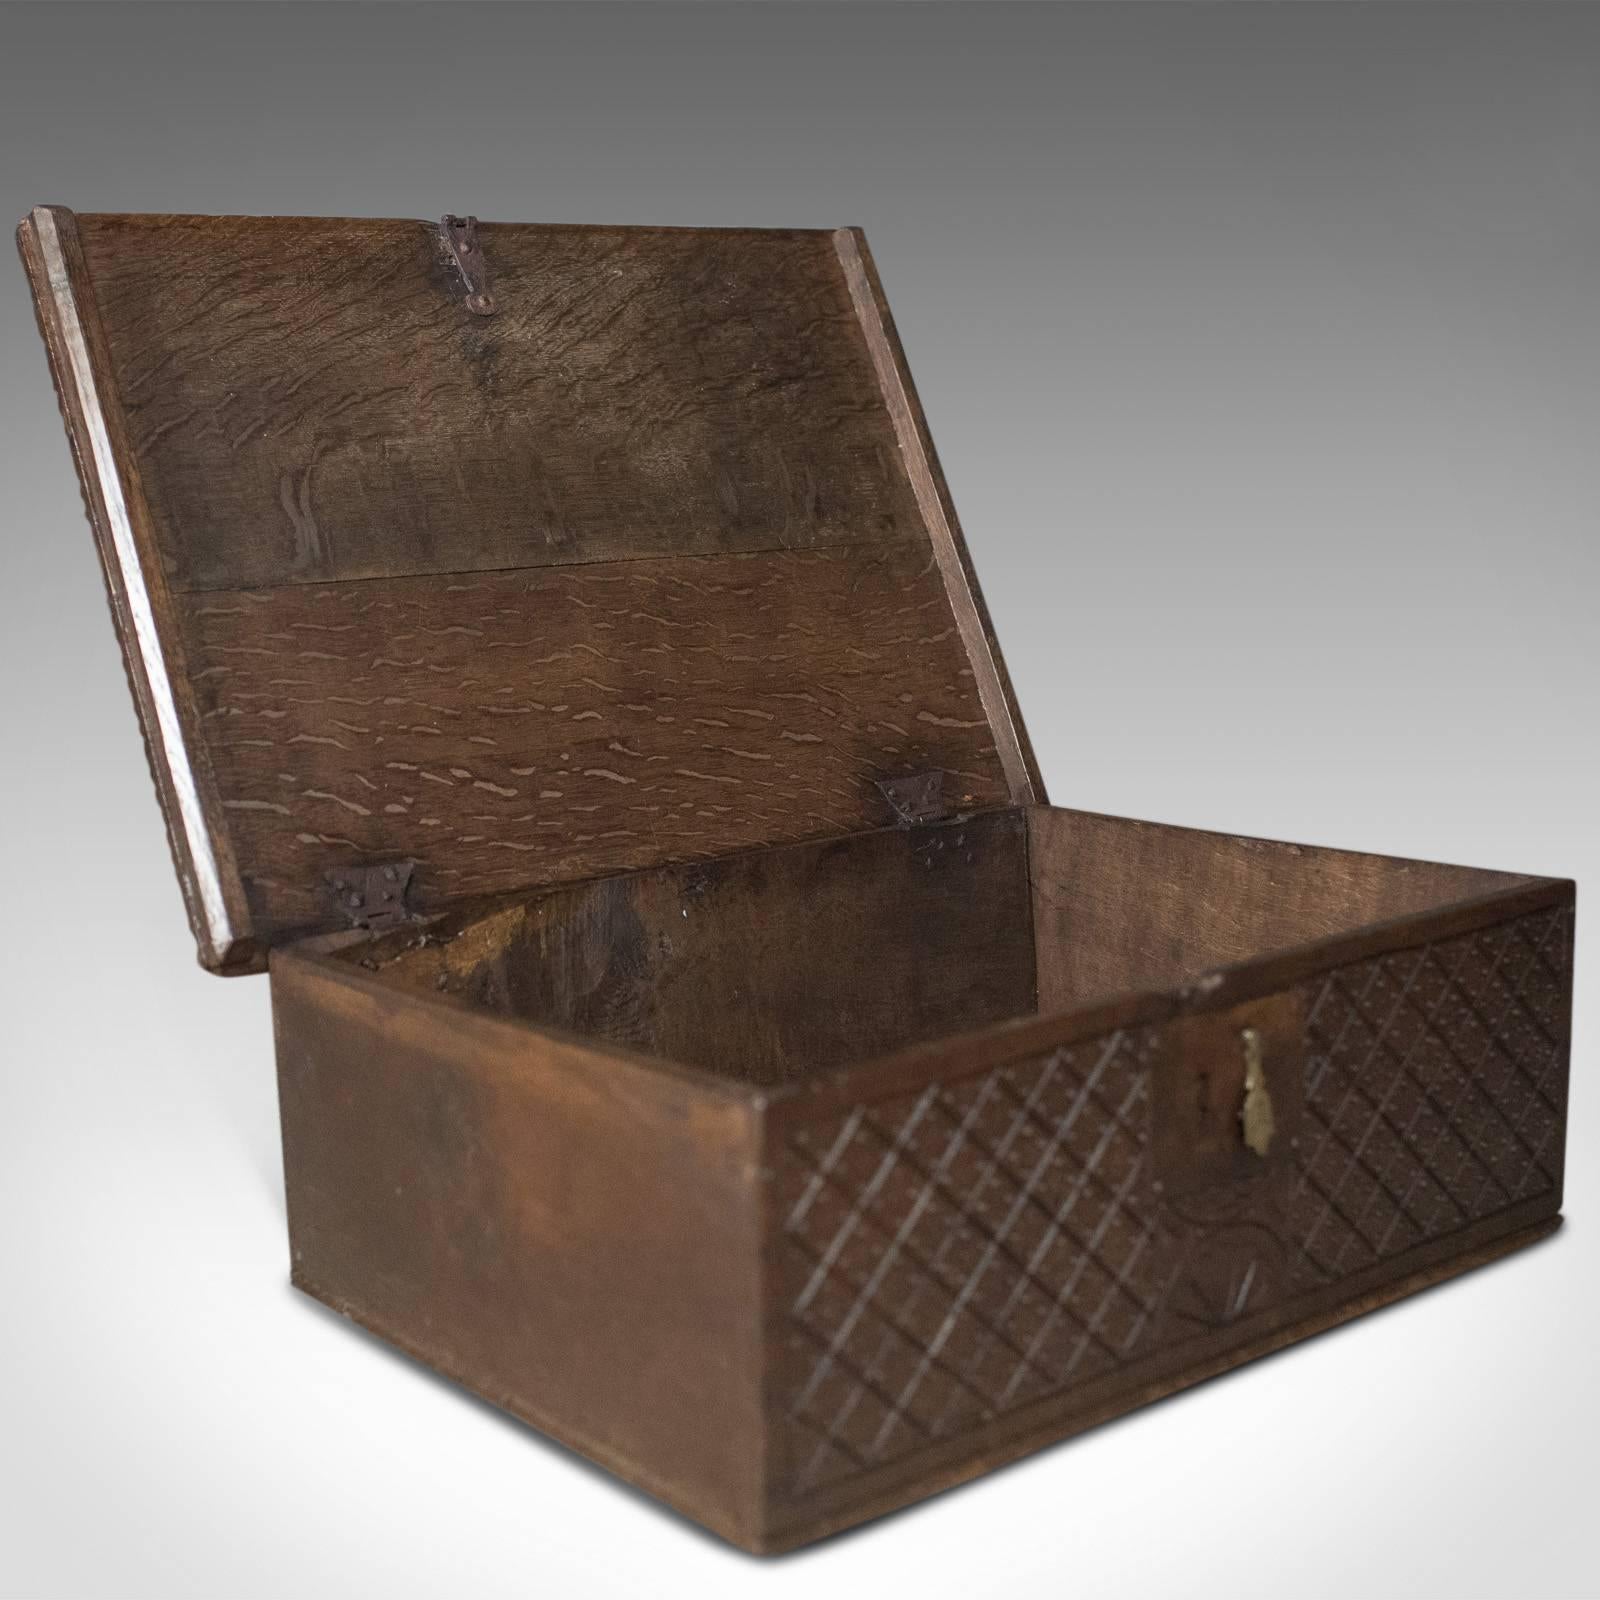 Queen Anne Antique Bible Box, English Oak Chest, circa 1700